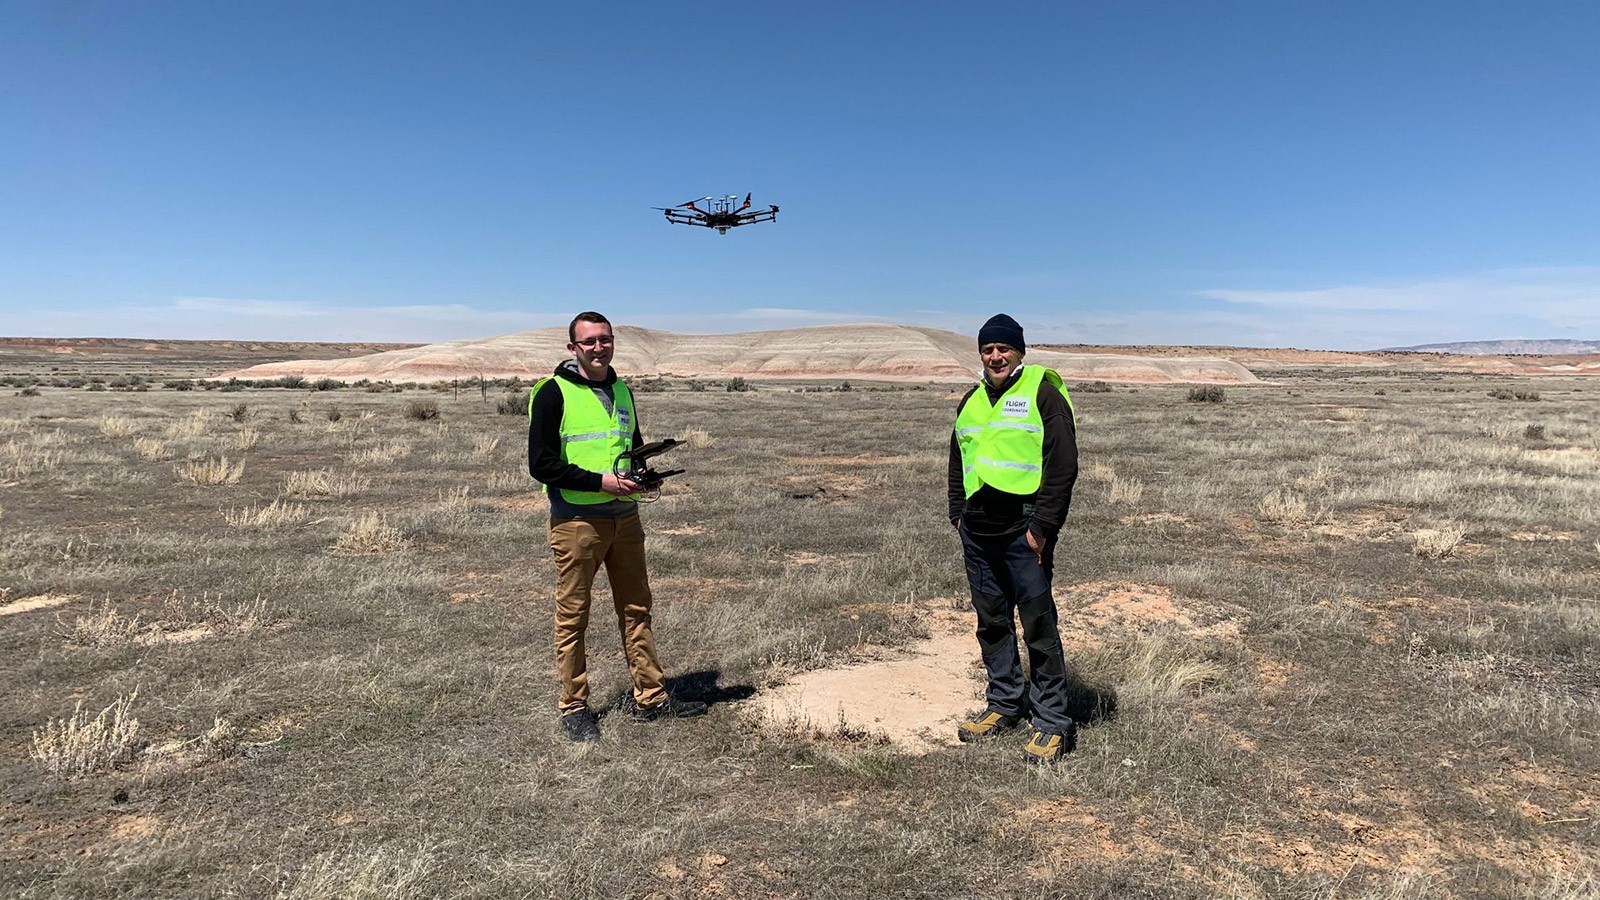 Members of the AggieAir team fly a drone in a field near Vernal, Utah.